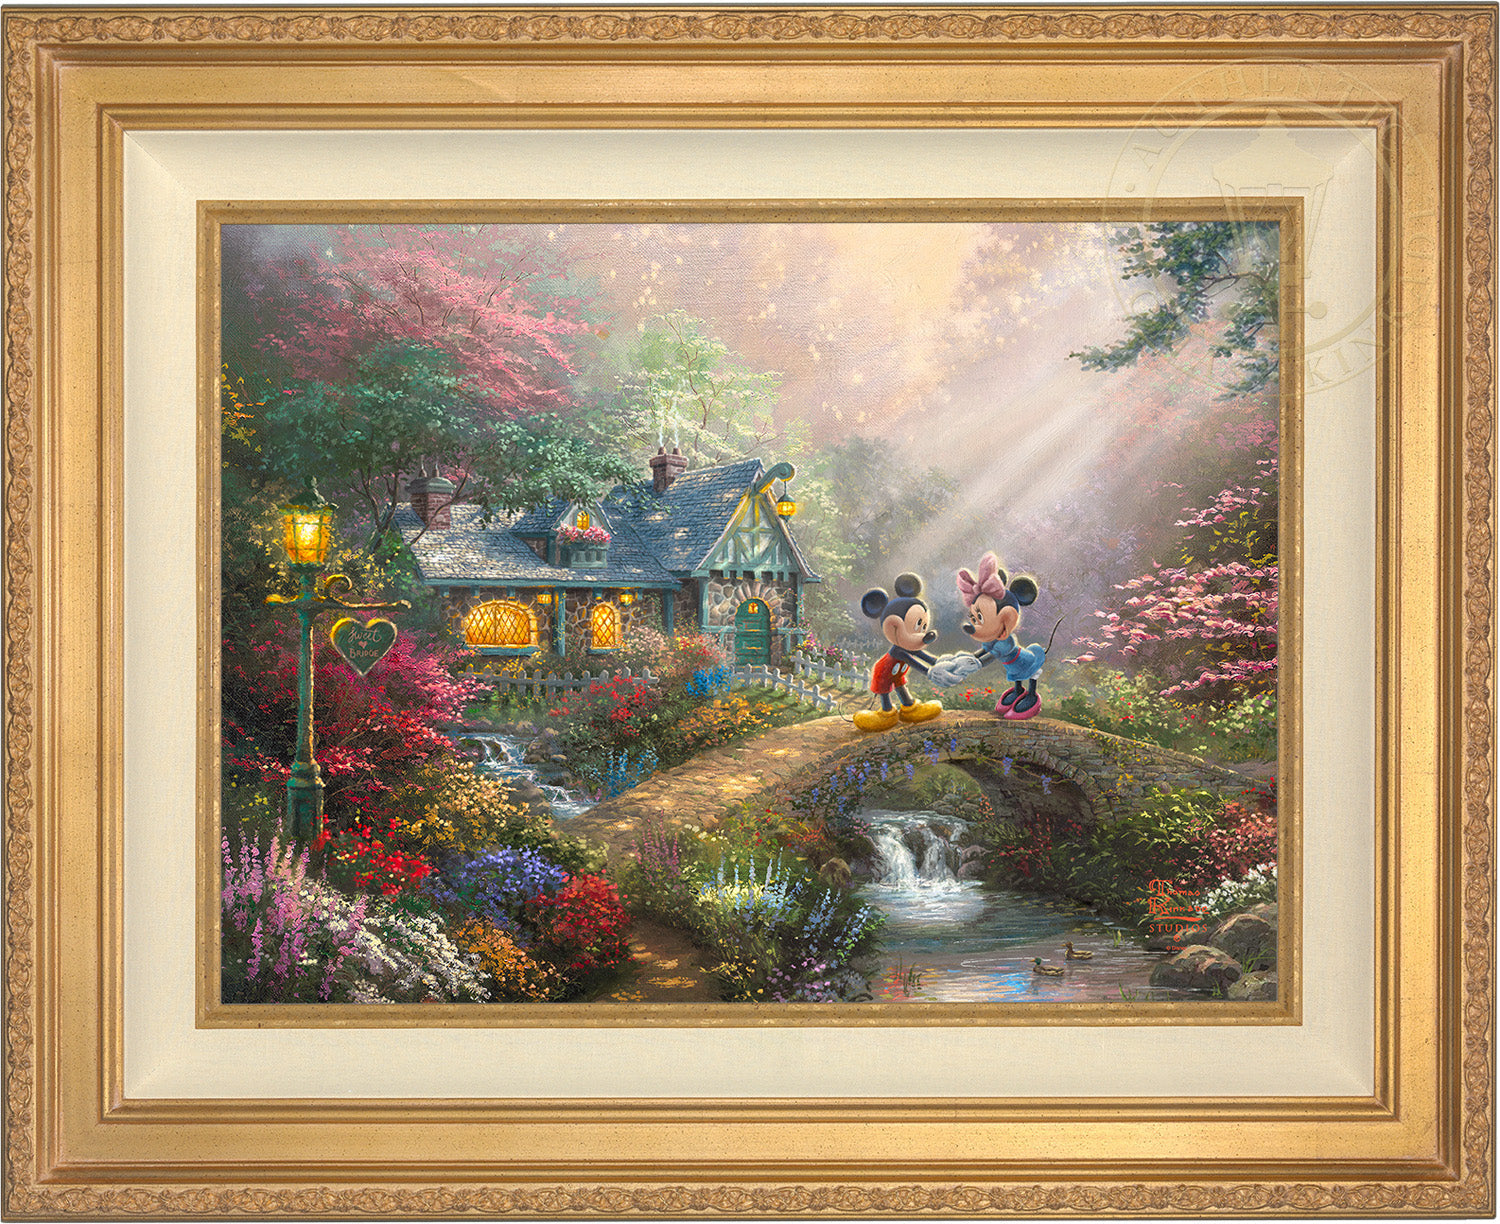 Disney Thomas Kinkade Puzzle - Mickey and Minnie Sweetheart Cafe